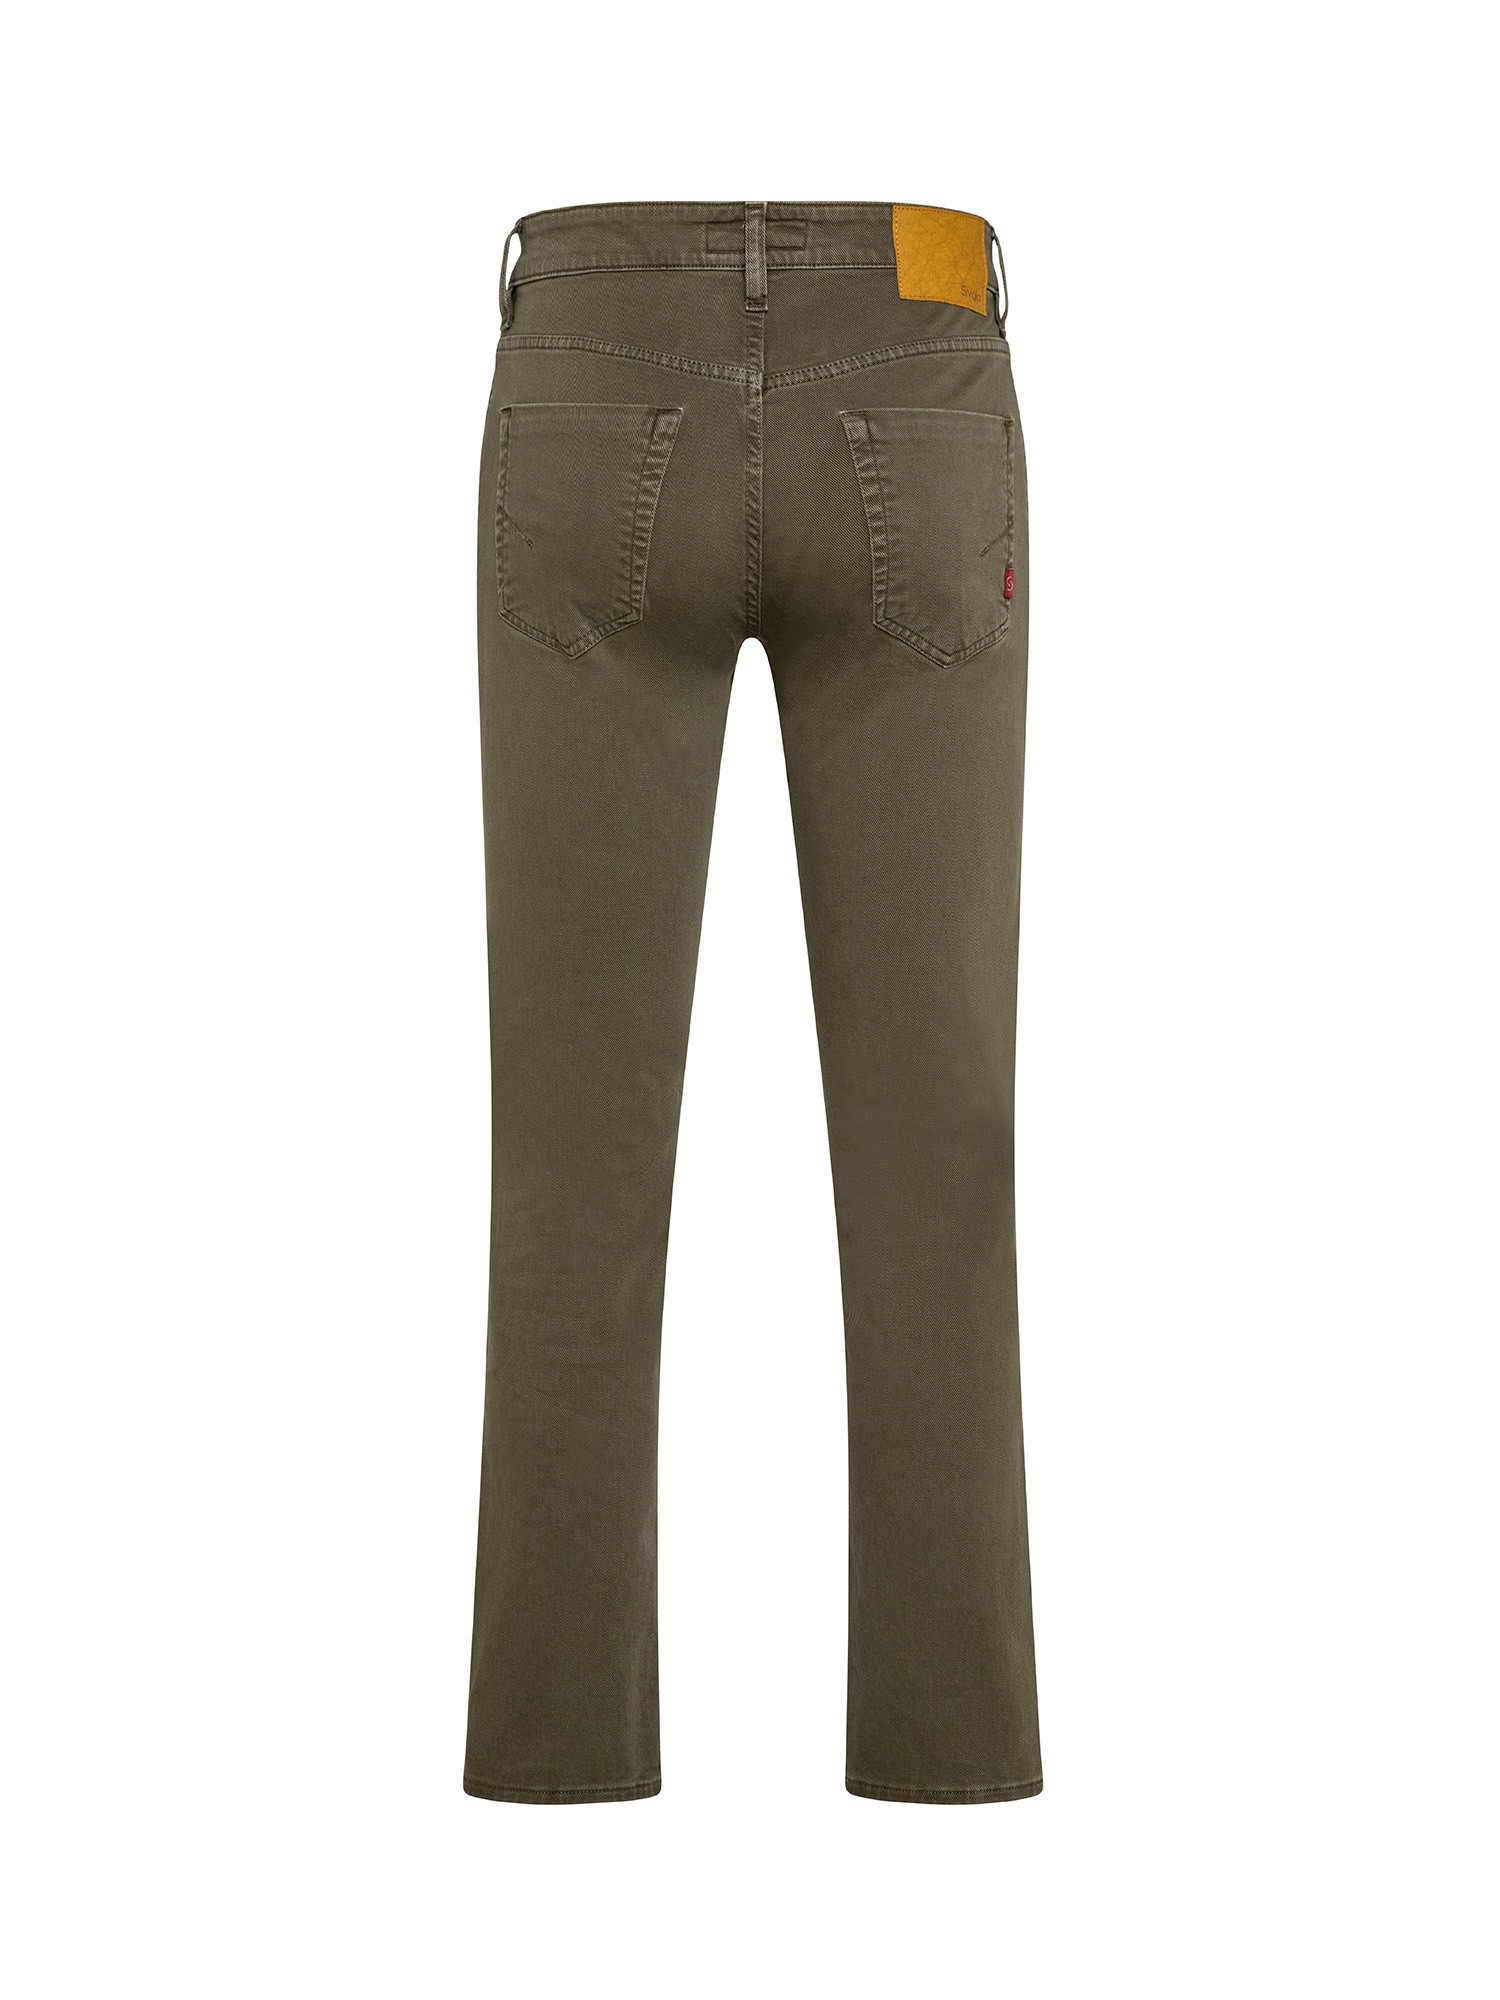 5 pocket denim trousers, Brown, large image number 1